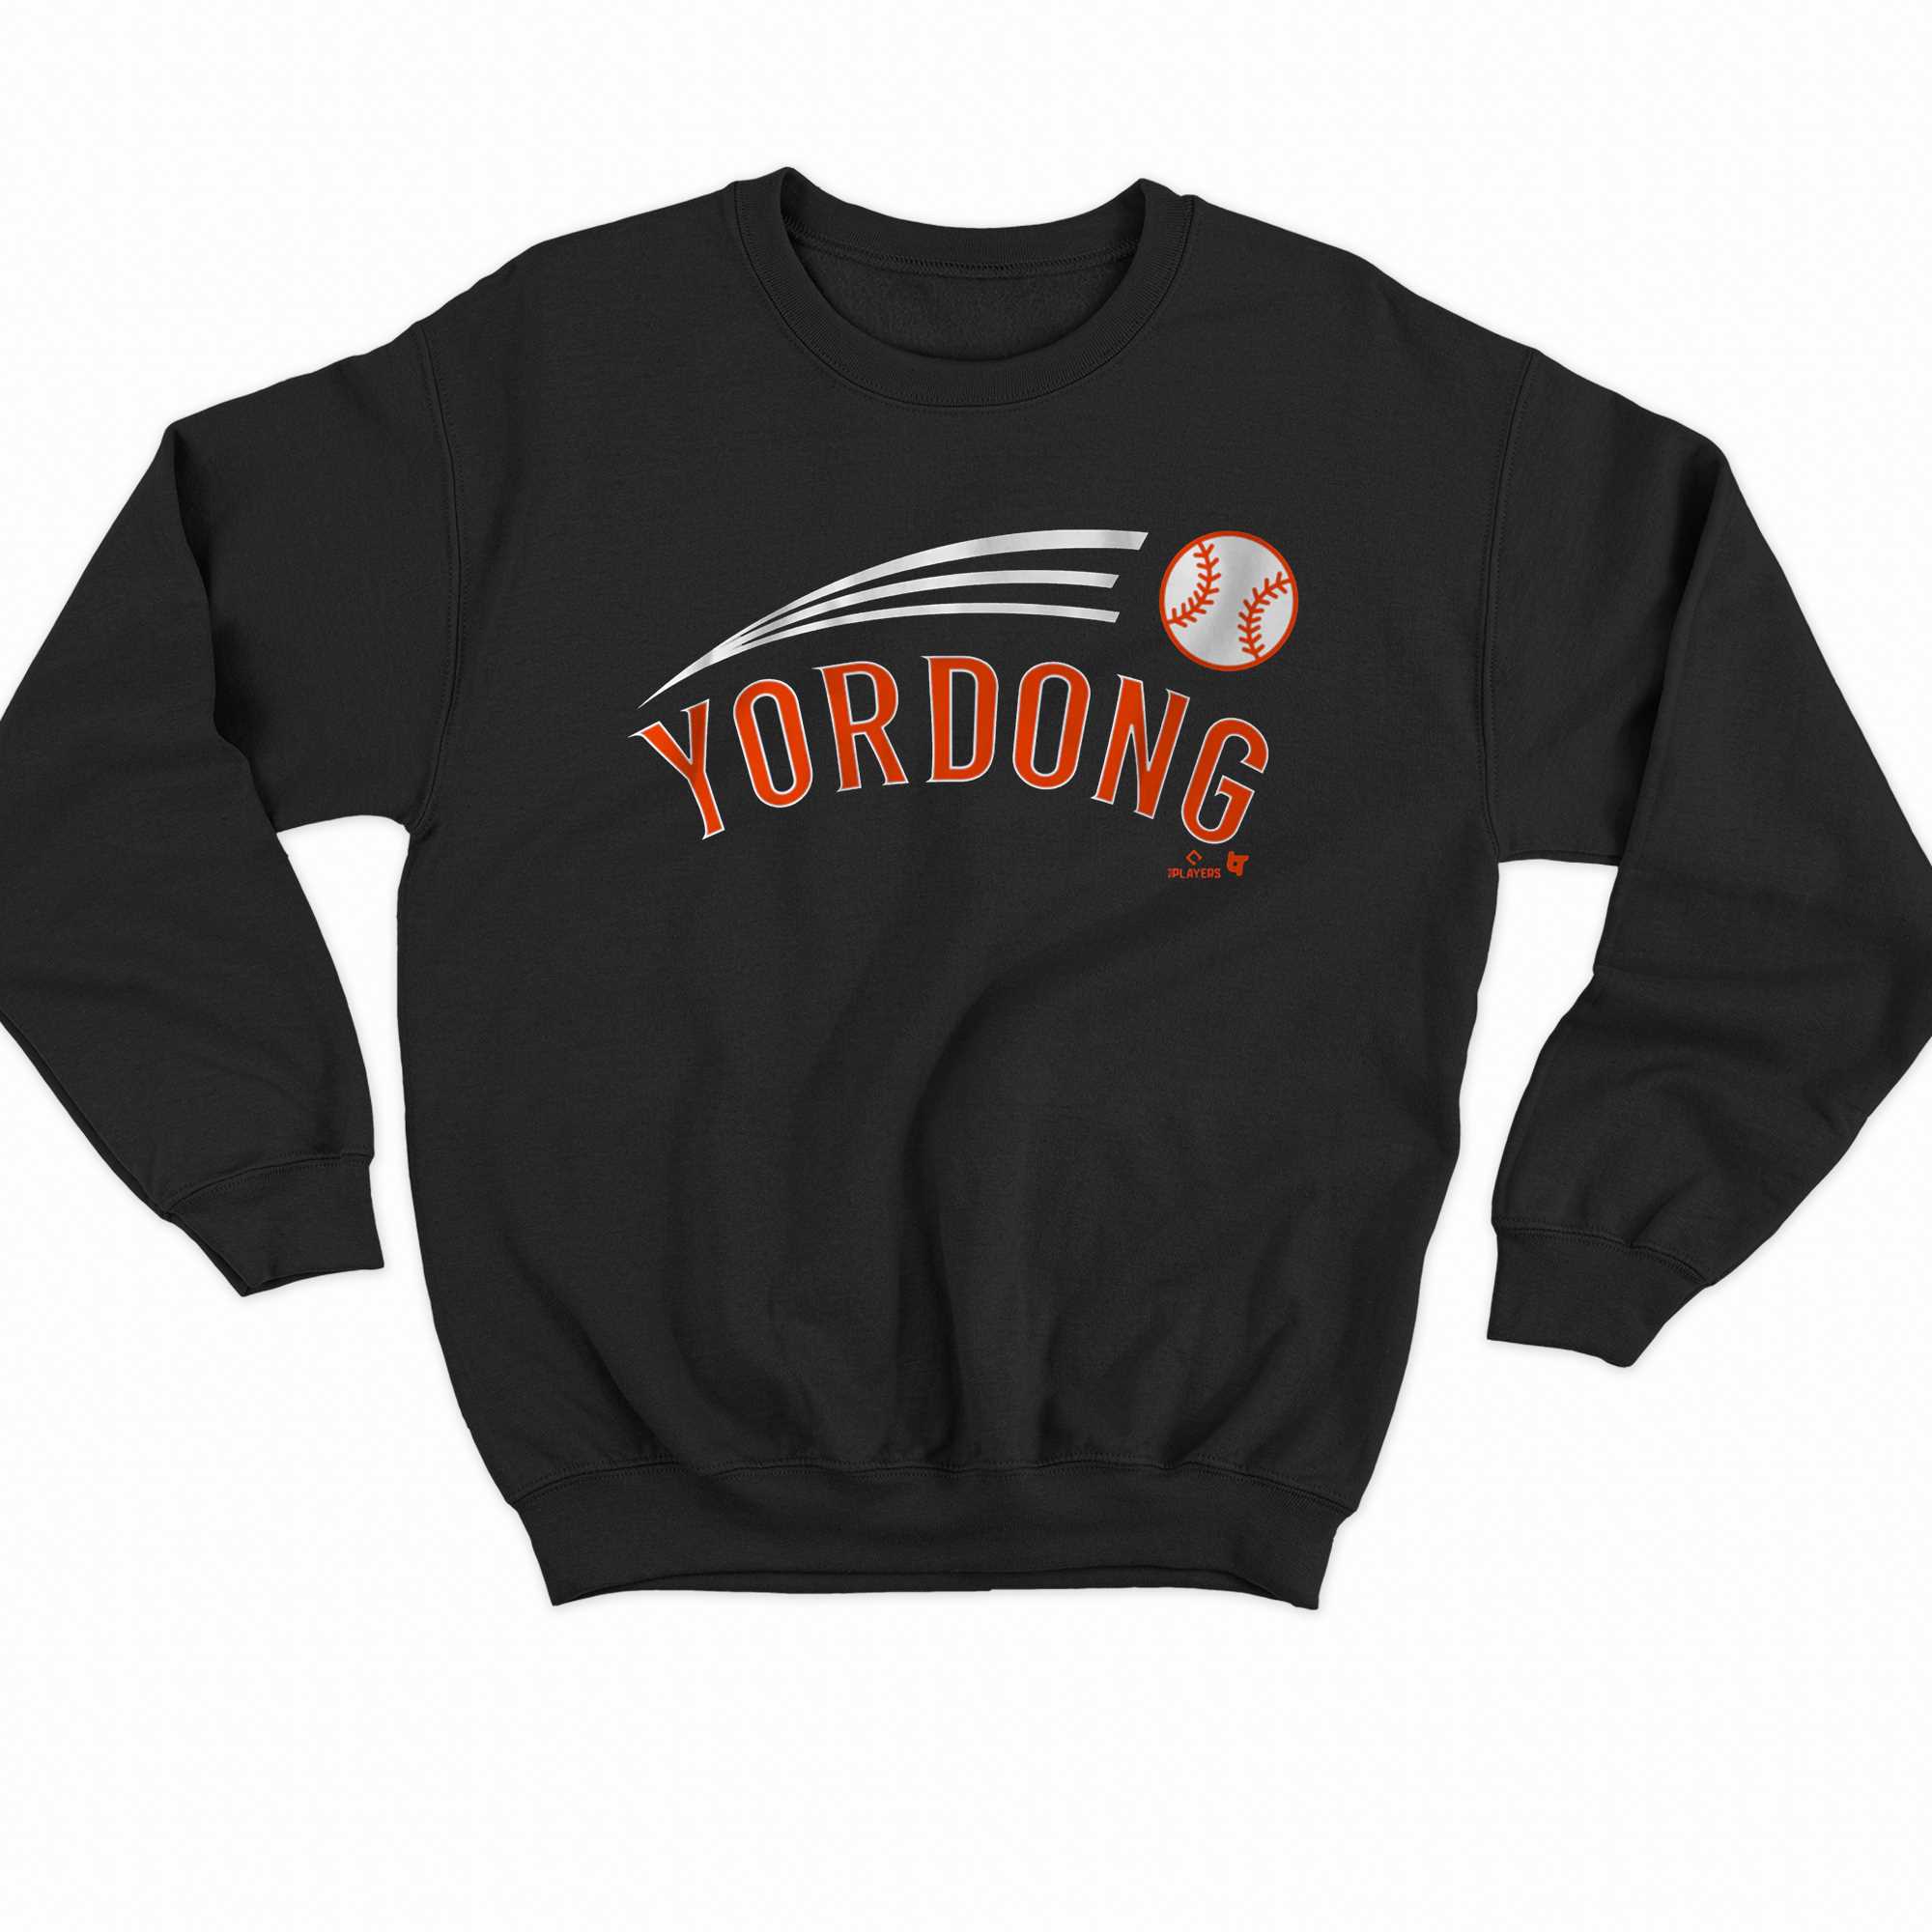 Yordan Alvarez Yordong Shirt 